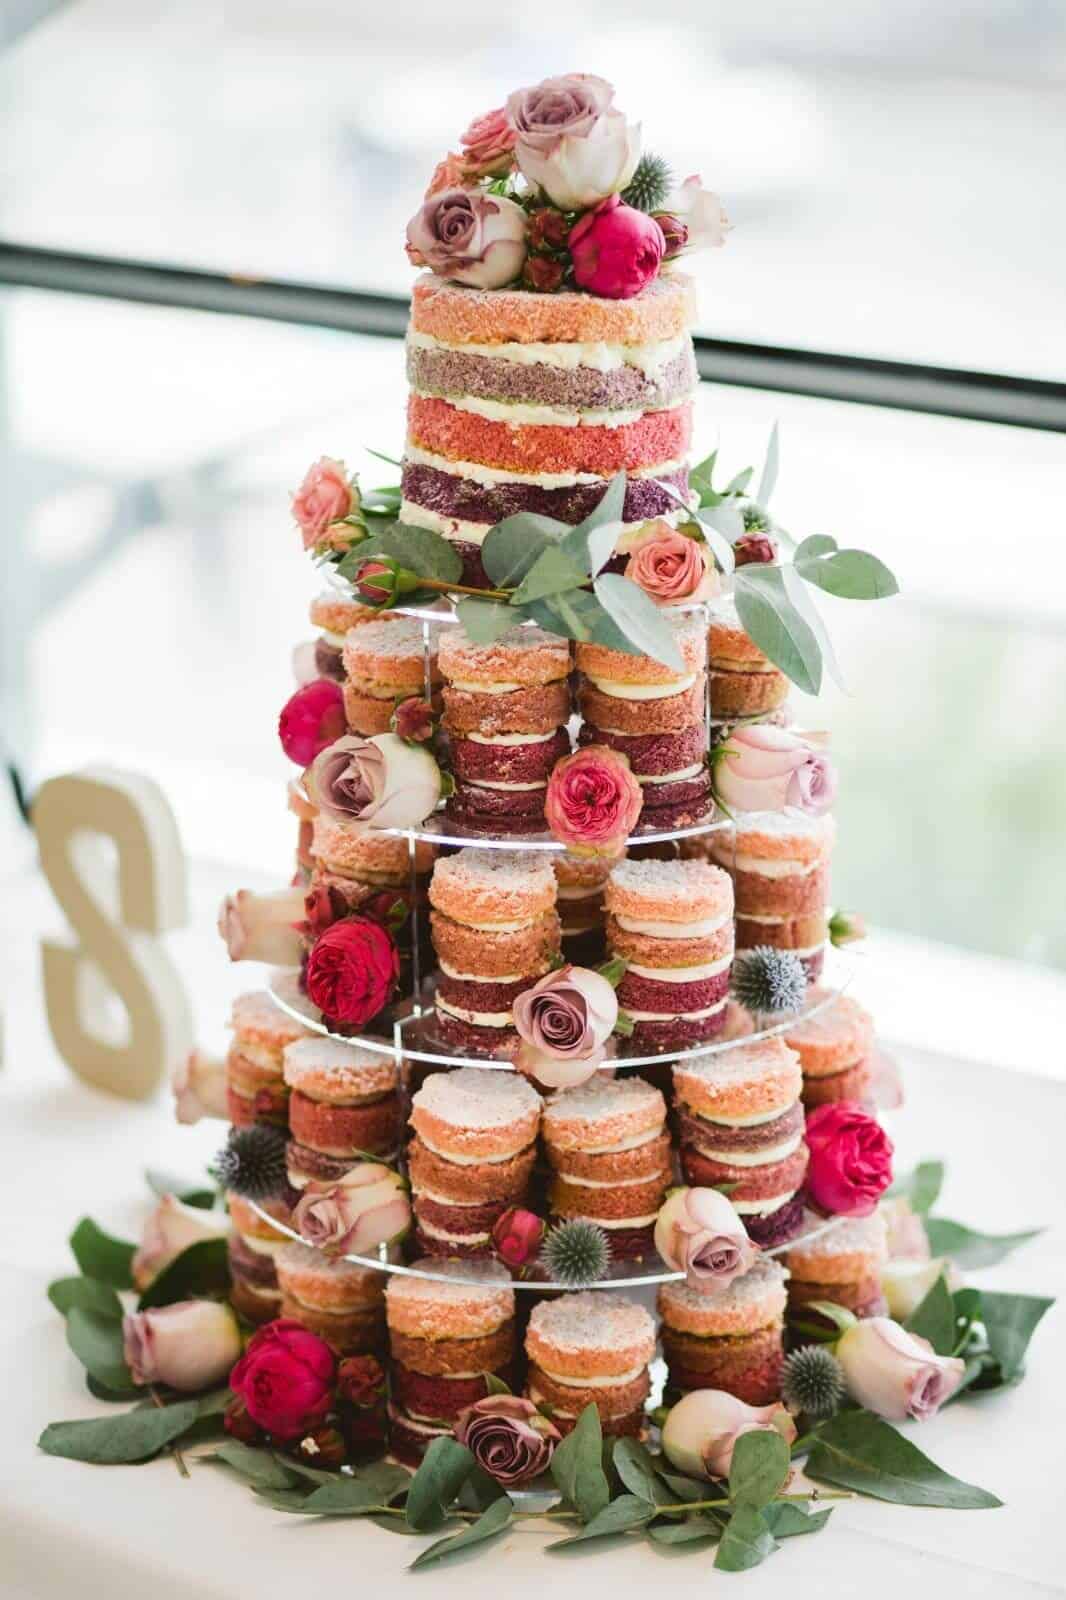 Wedding dessert tower-shaped